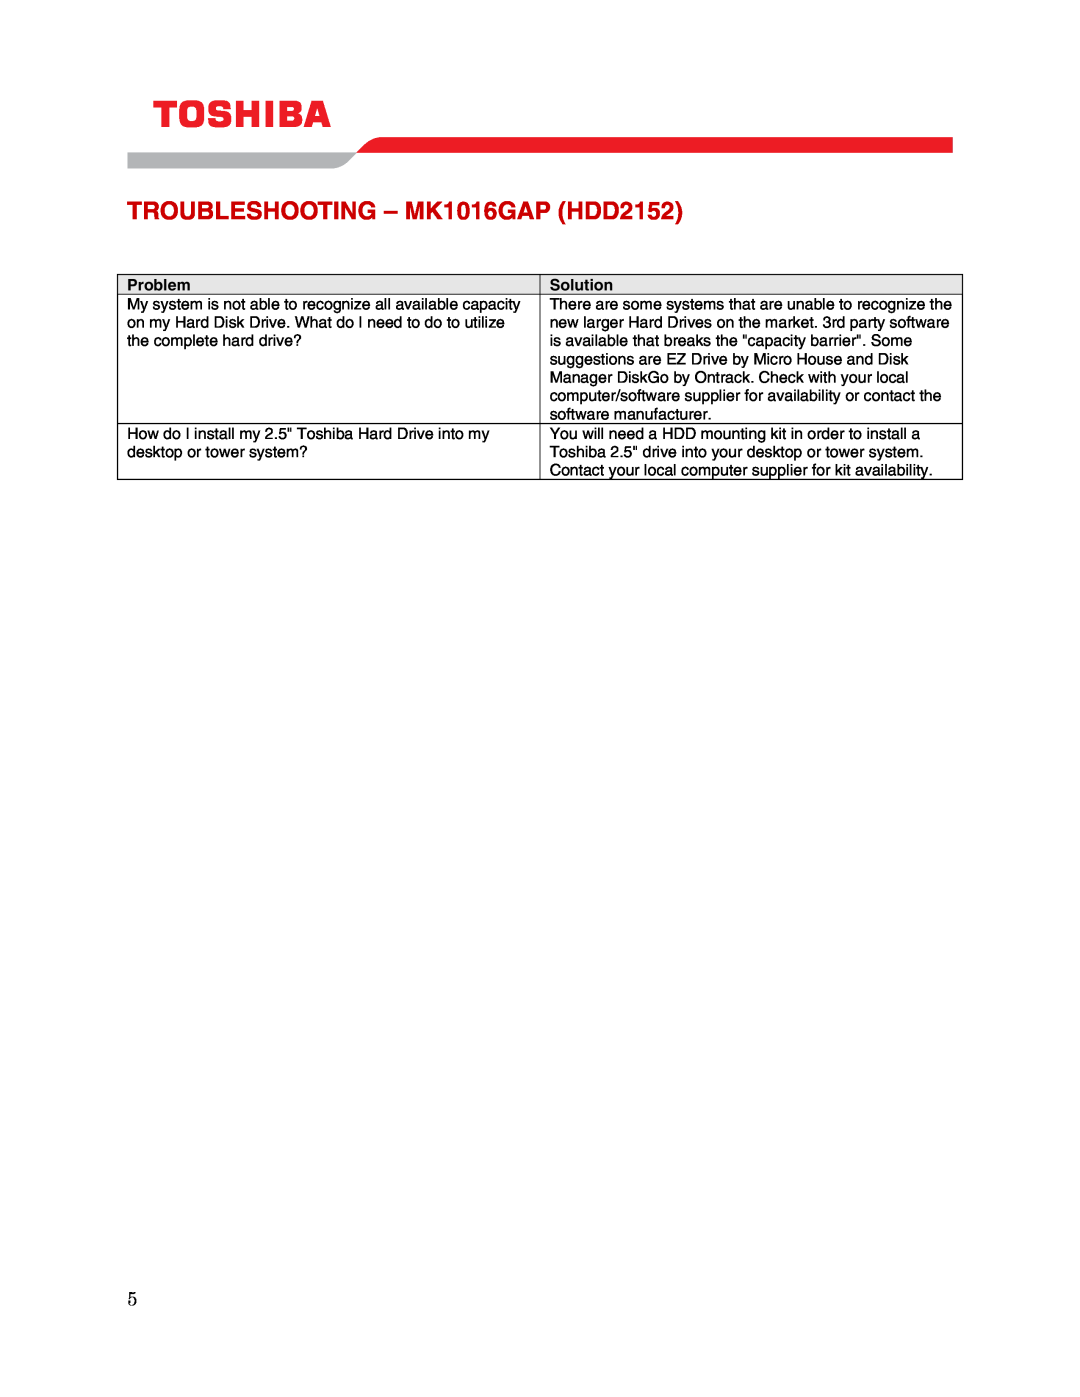 Toshiba user manual TROUBLESHOOTING - MK1016GAP HDD2152, Problem, Solution 